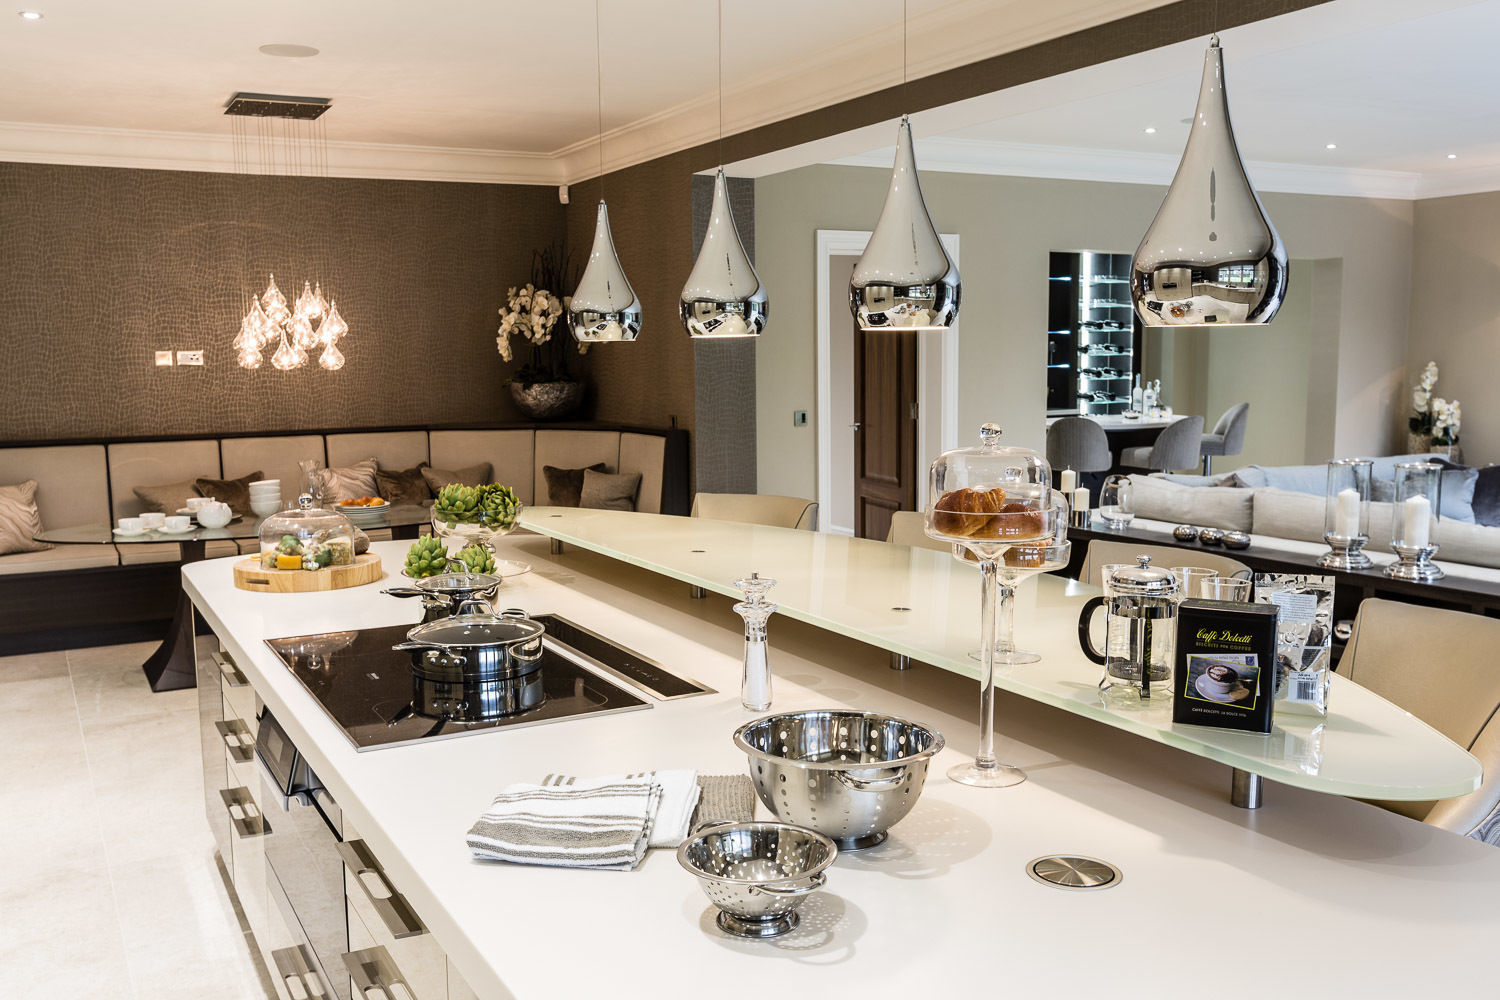 Kitchen with Breakfast Bar Luke Cartledge Photography Кухня в классическом стиле